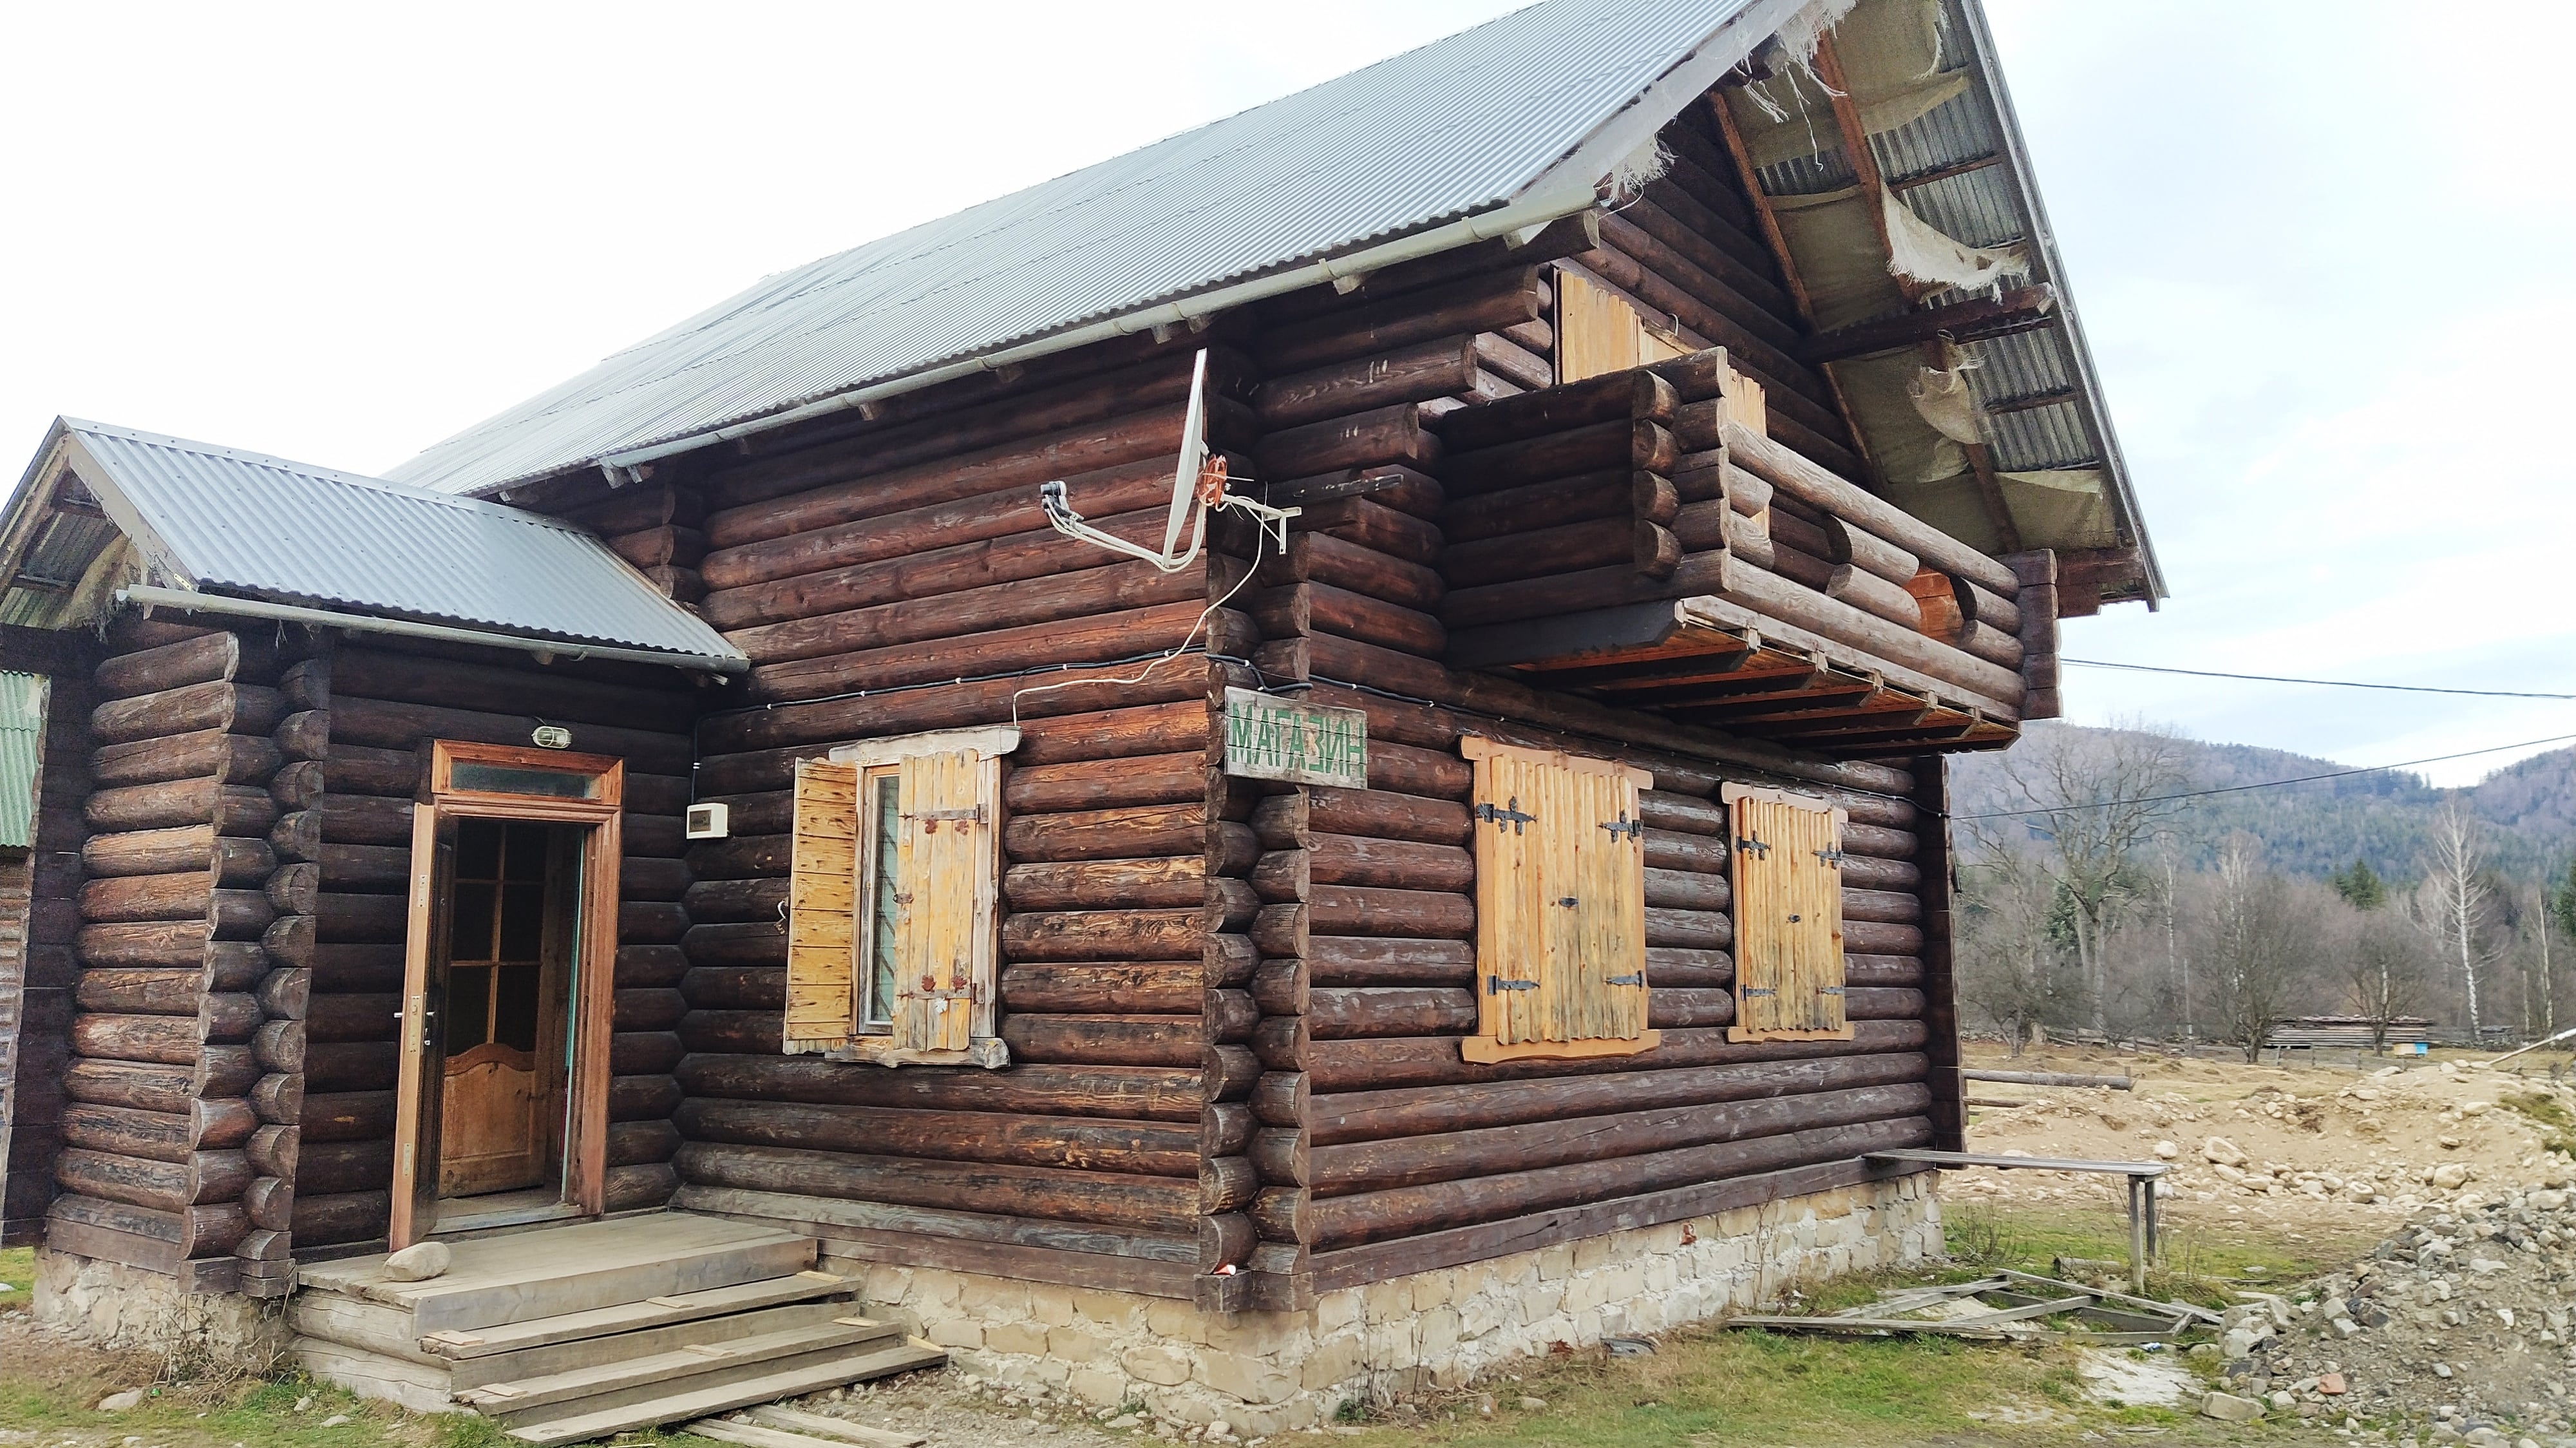 wooden house. Stara Guta